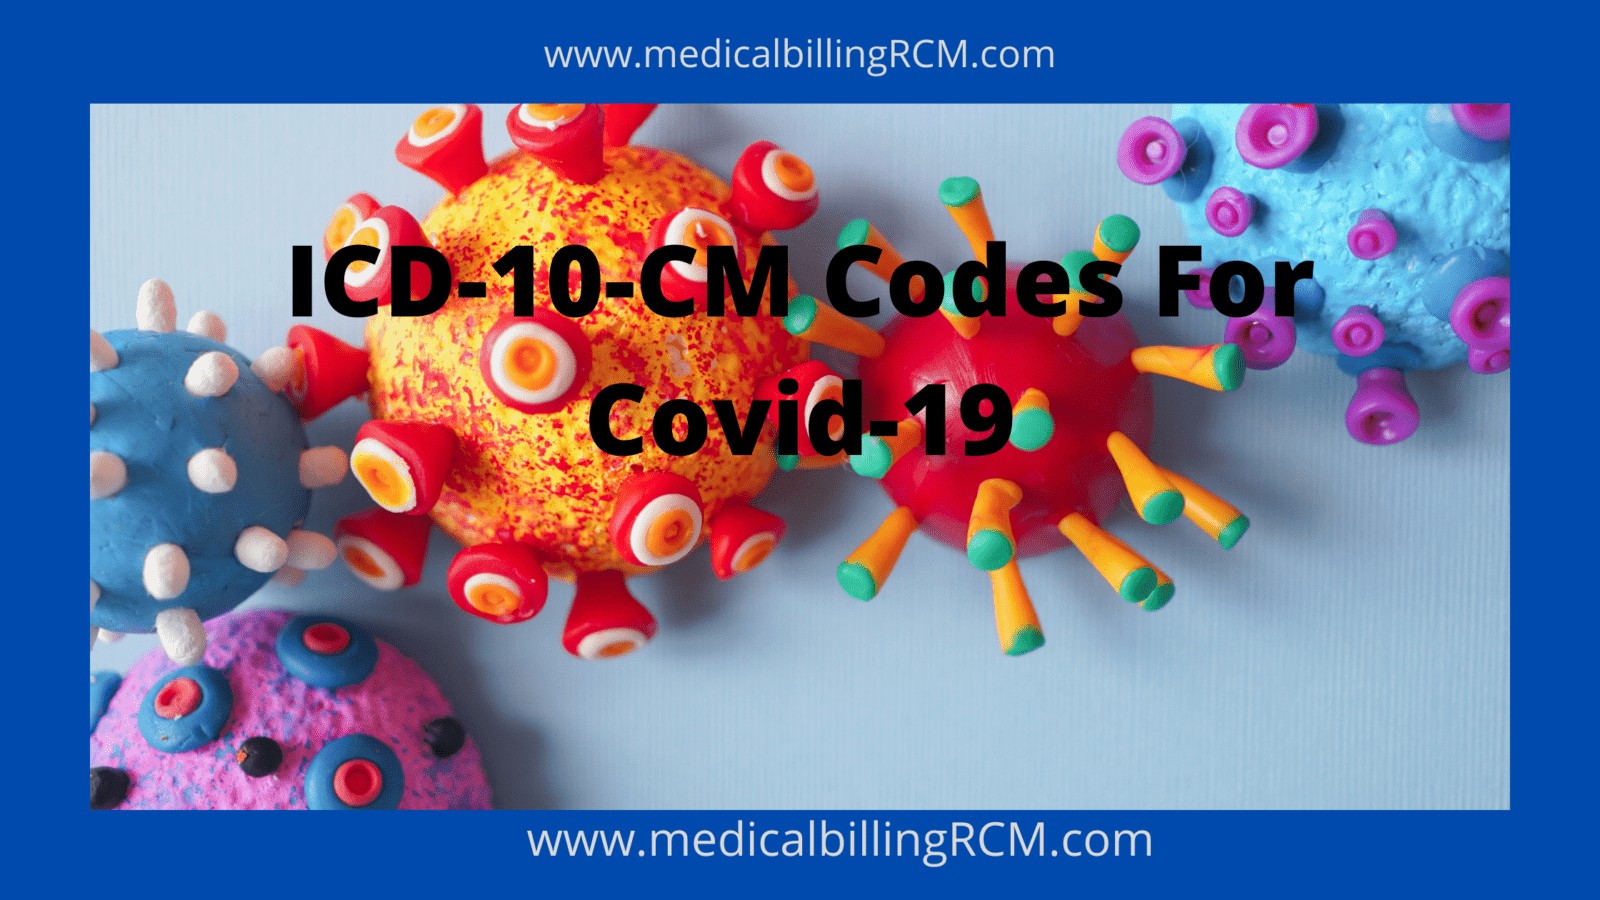 Covid-19 ICD-10 codes